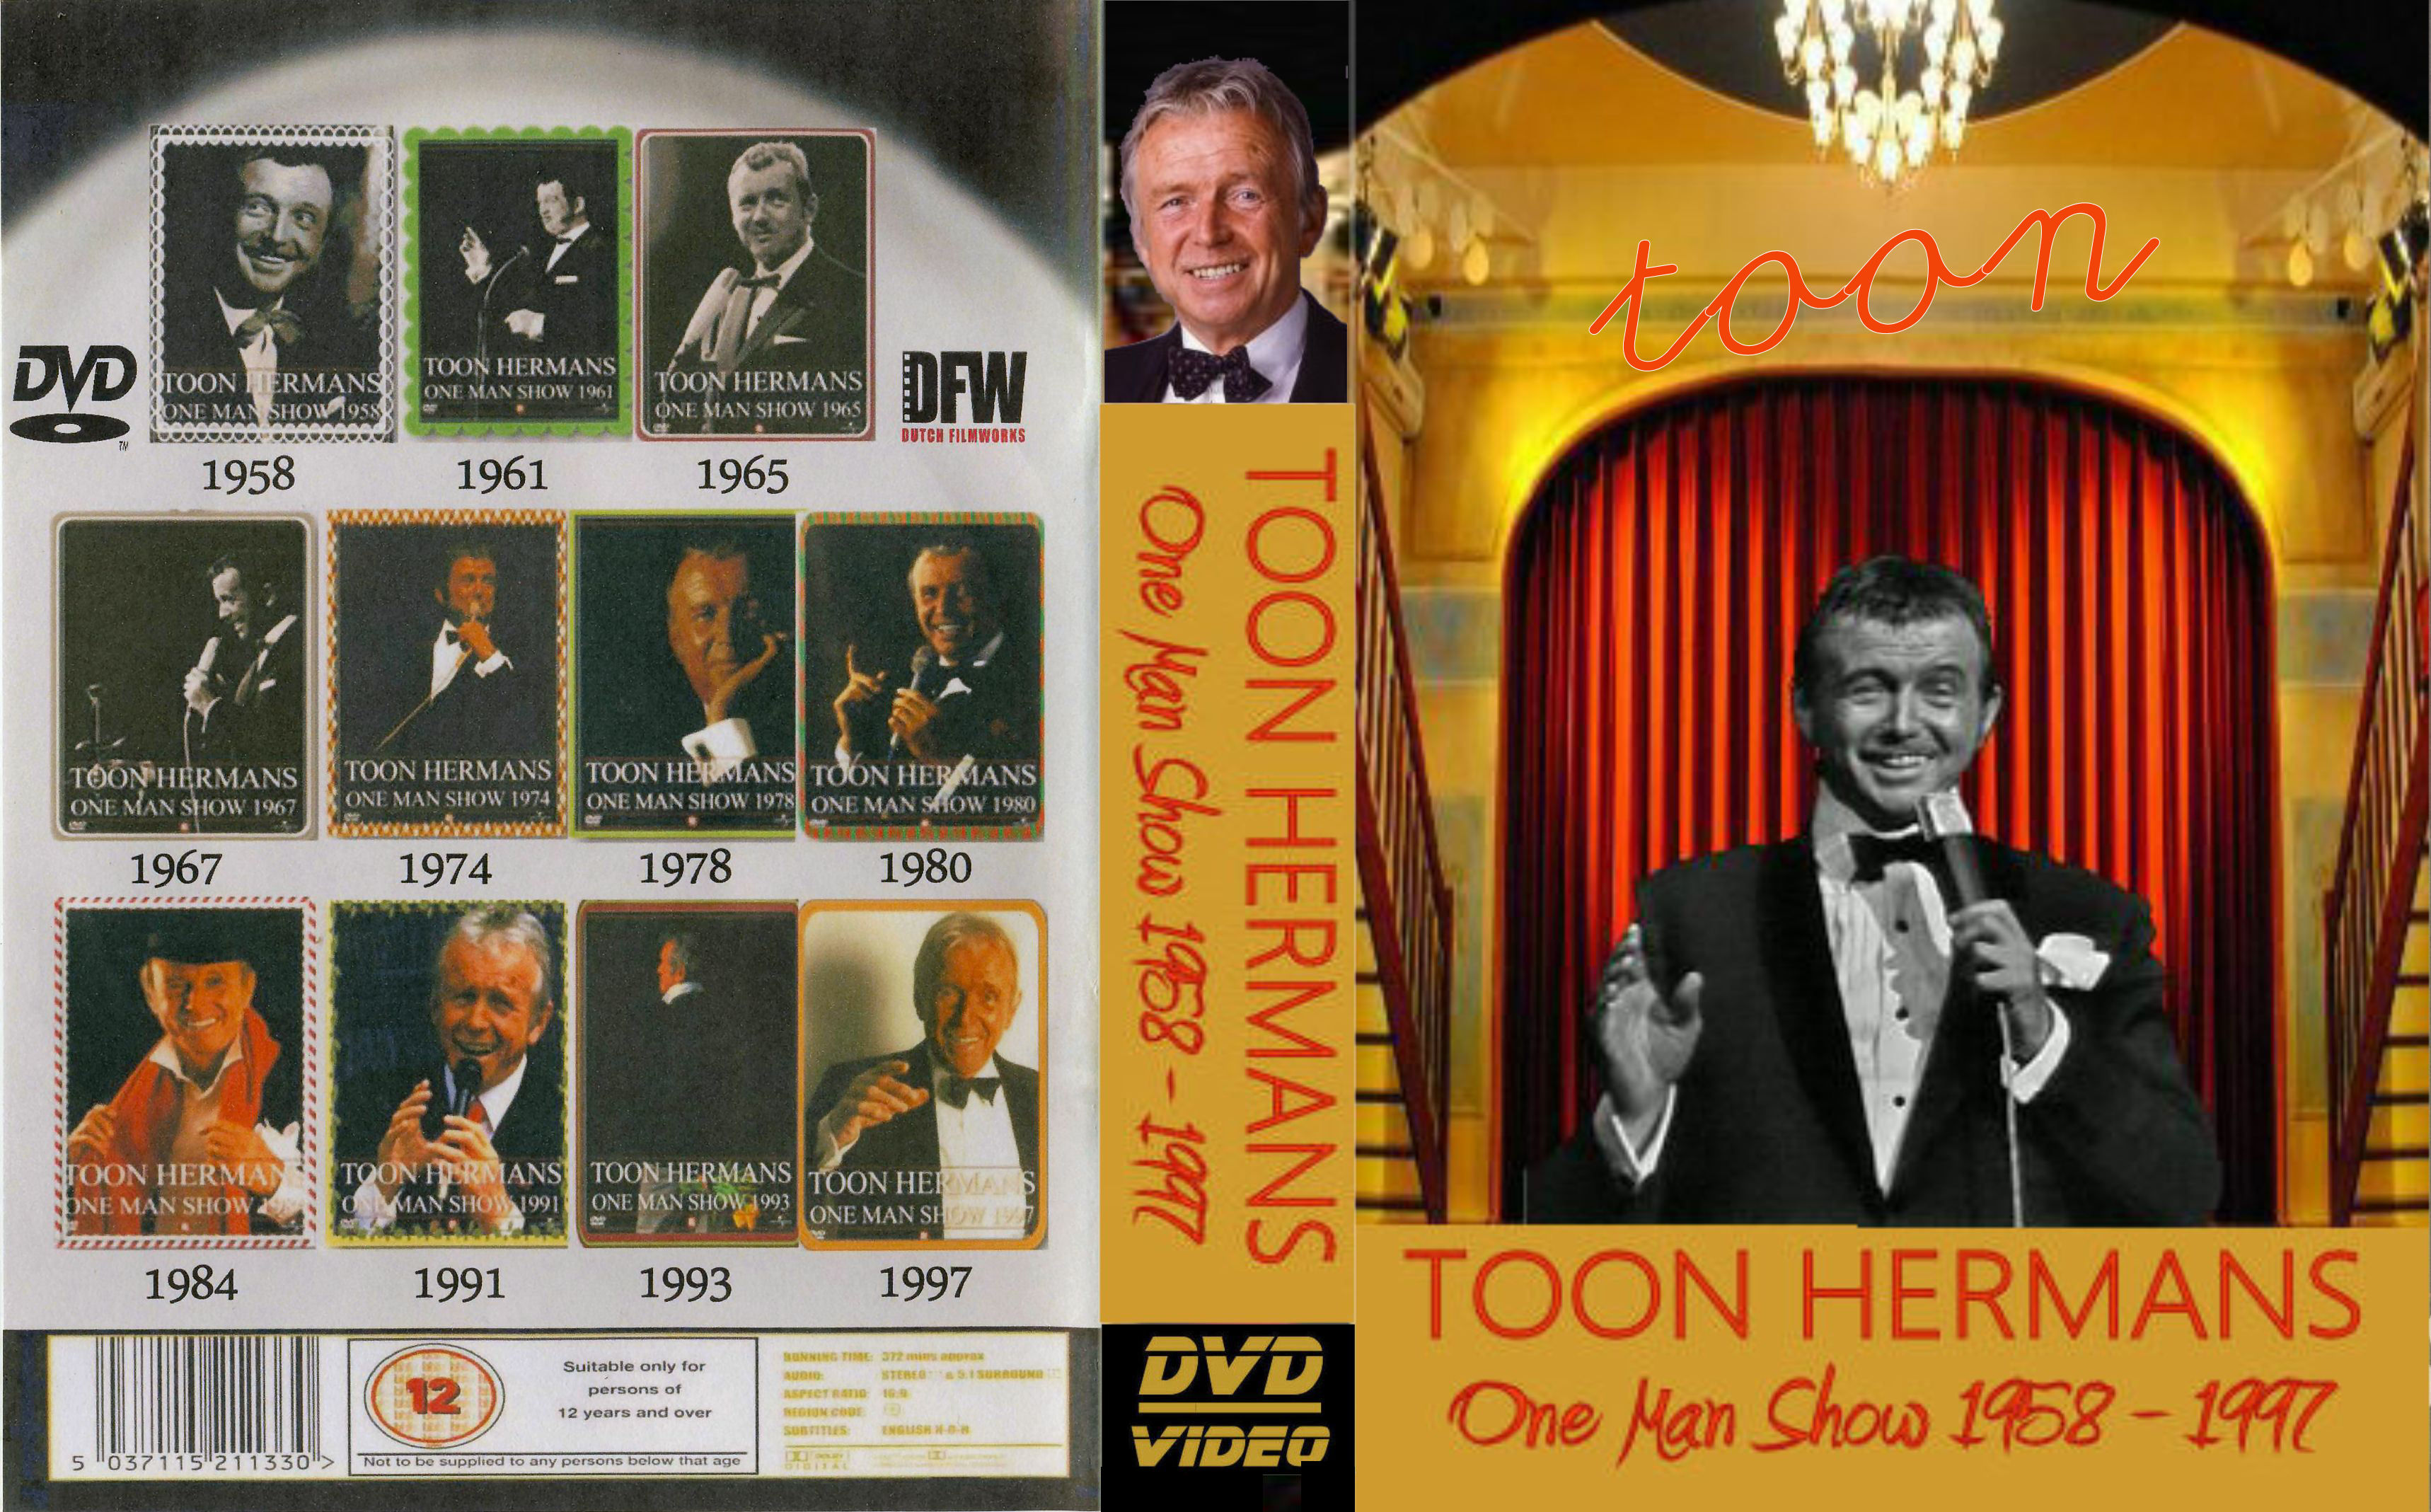 Toon Hermans One Man Show 1958 - 1997 DvD 7 (1980)